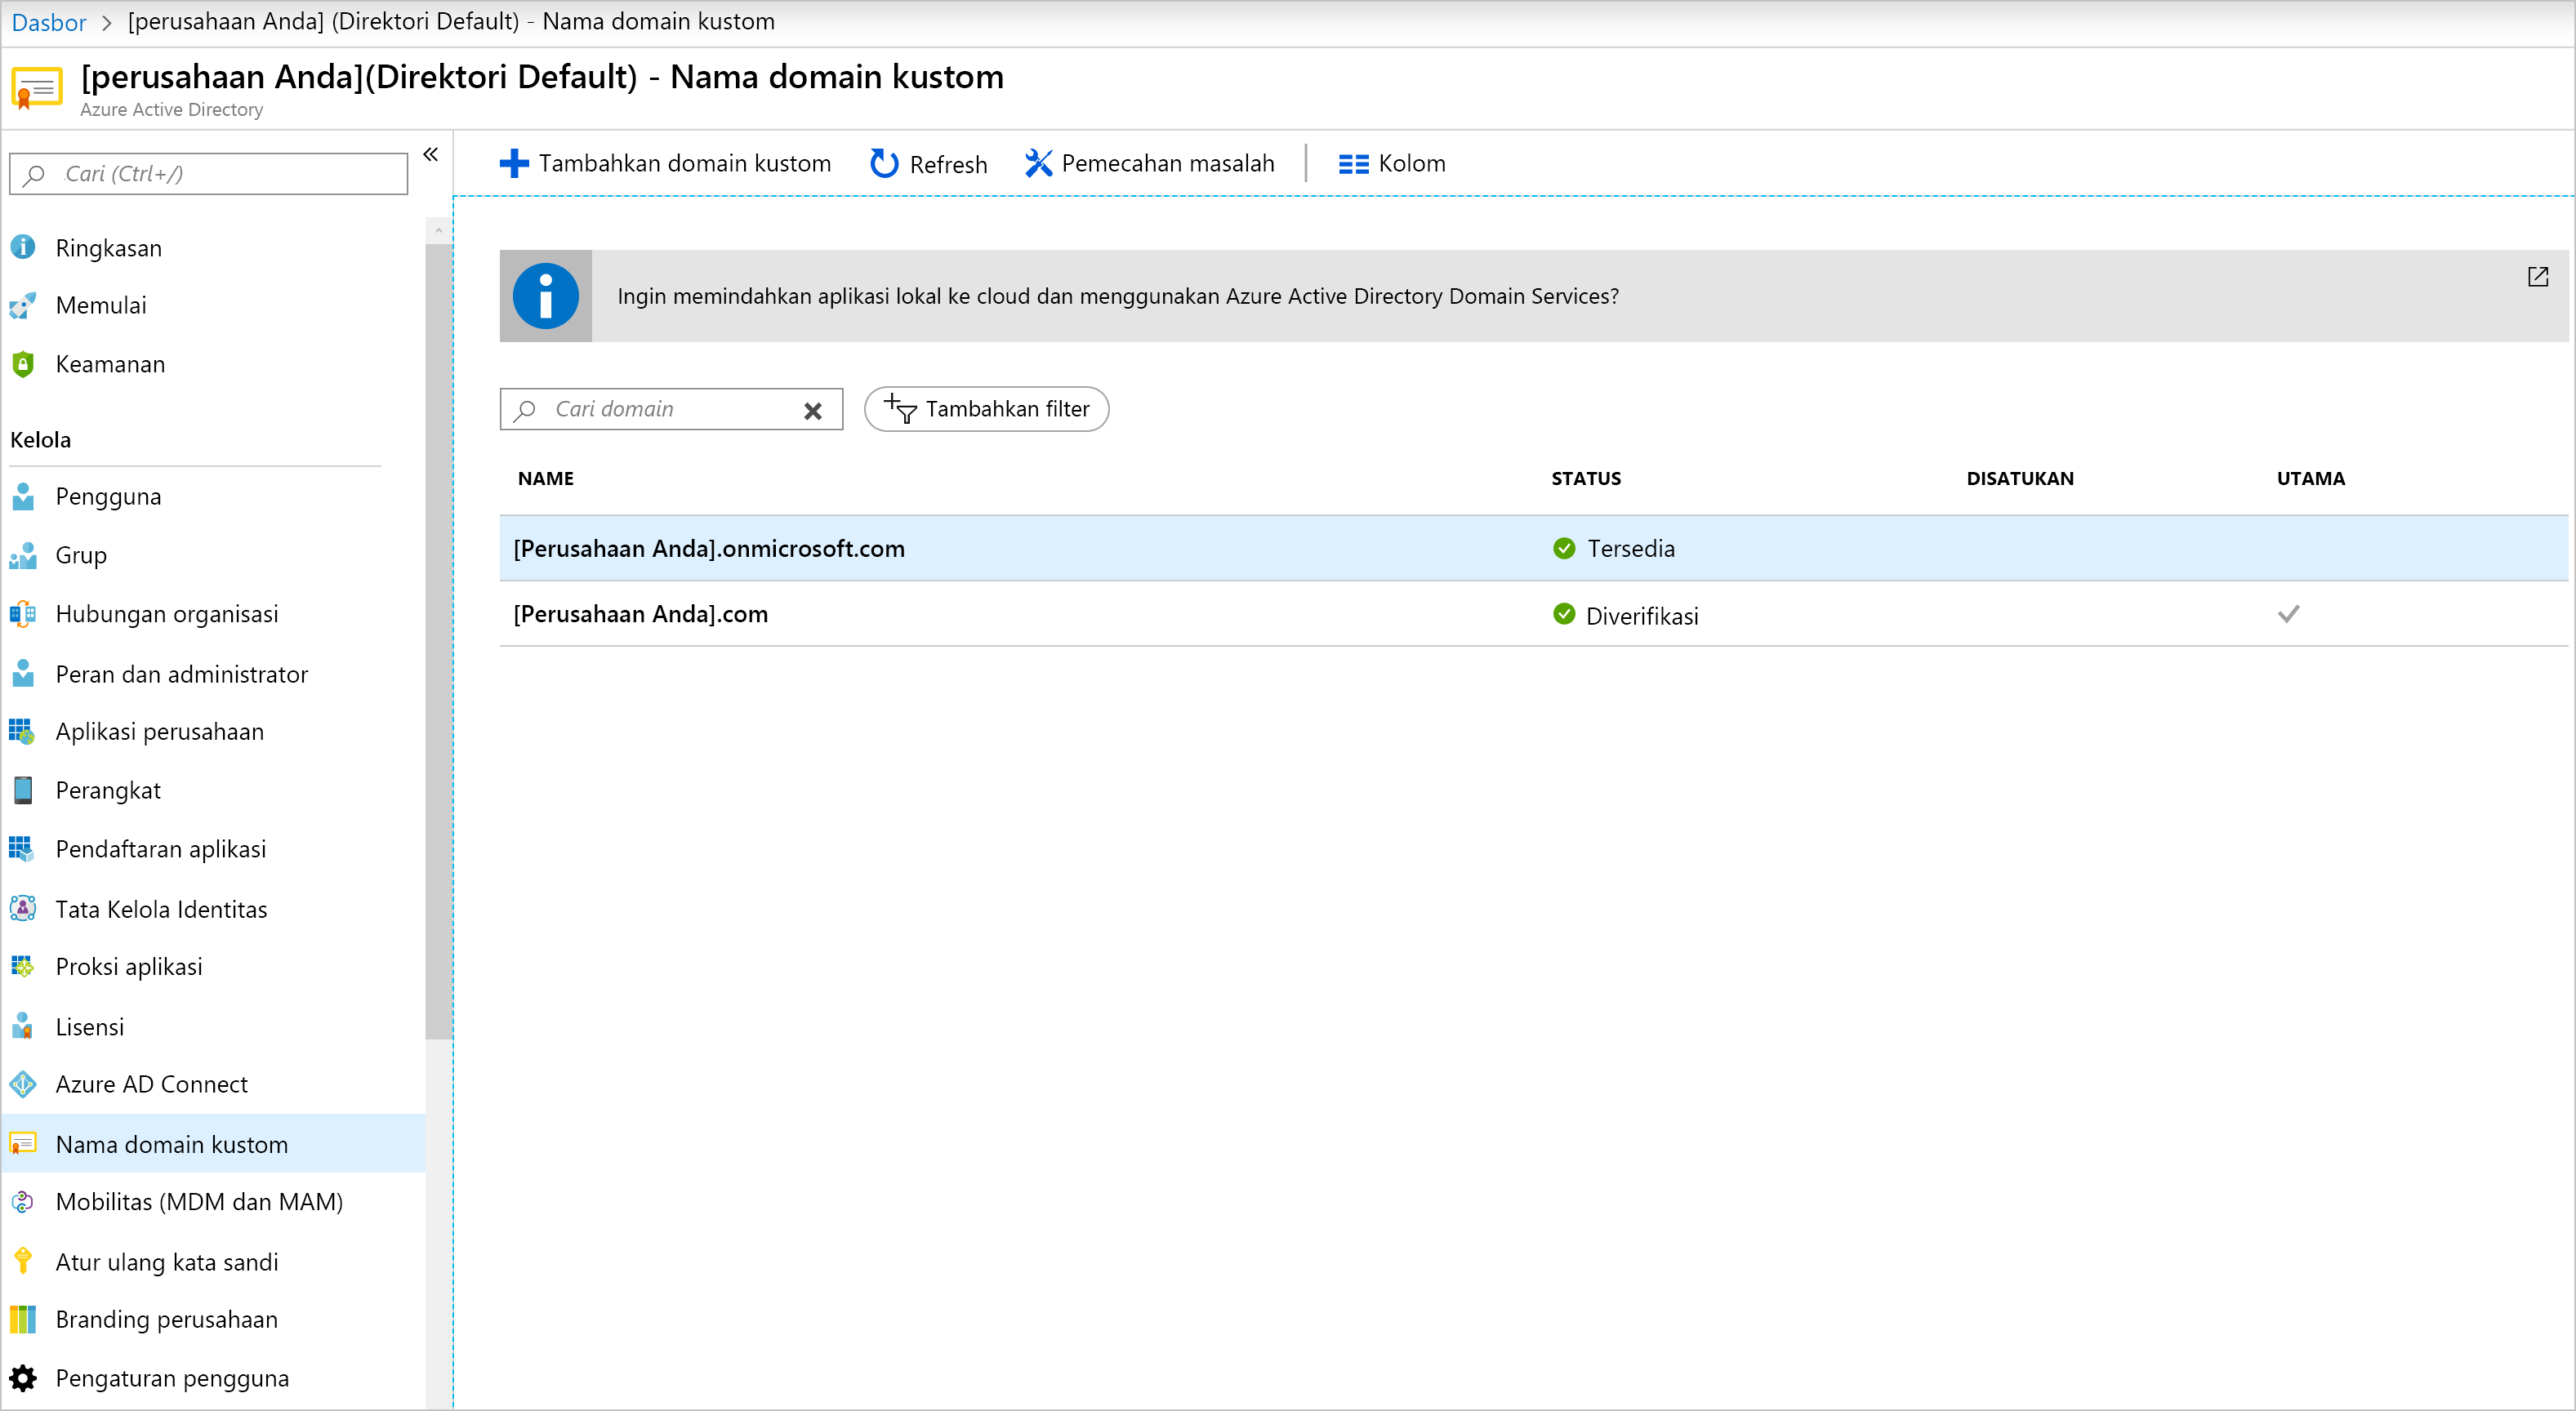 Screenshot of example domain name under Microsoft Entra ID > Custom domain names in the Azure portal.